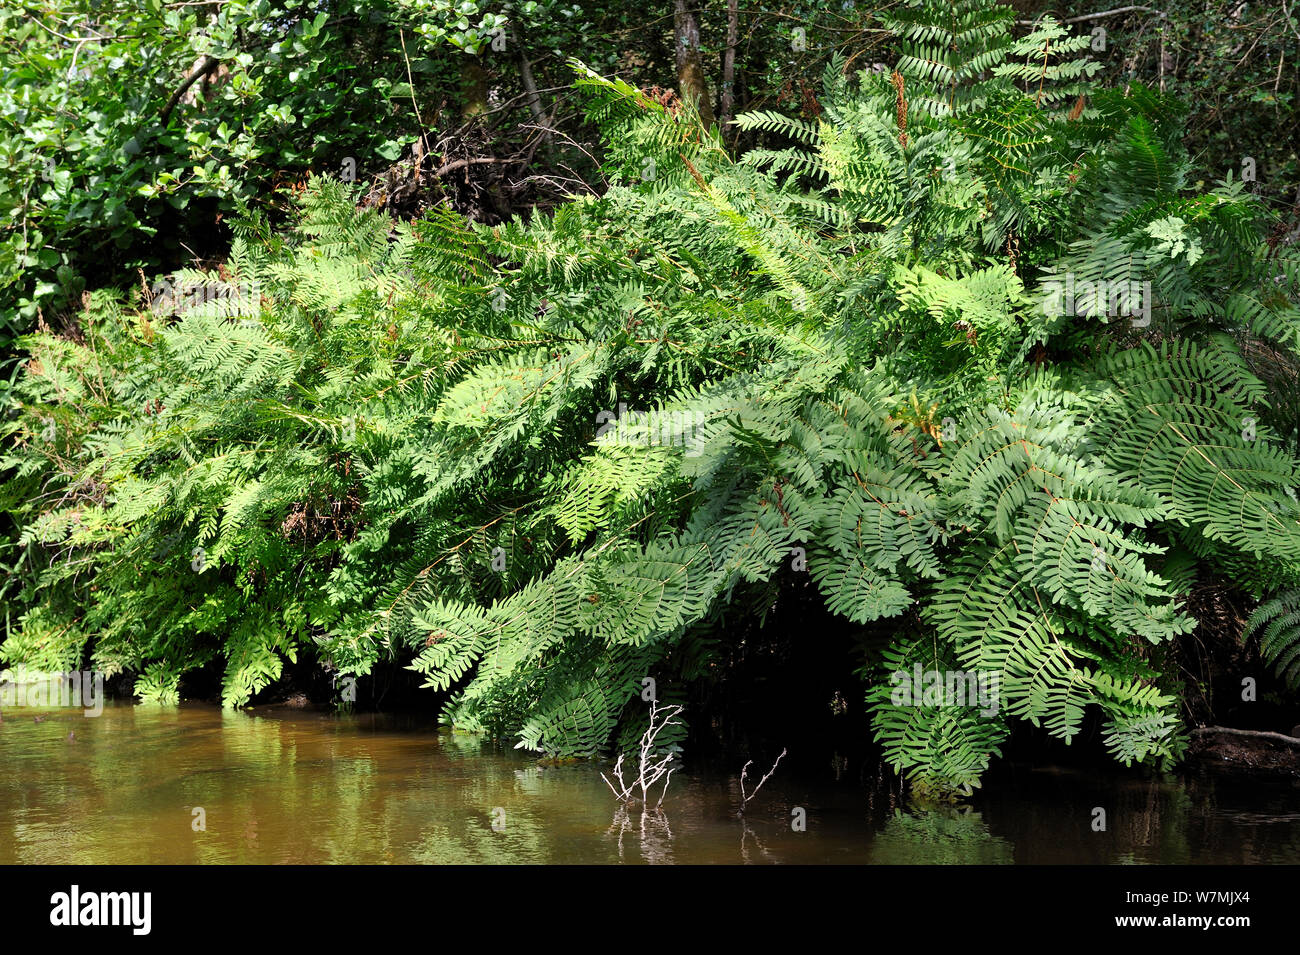 Royal fern (Osmunda regalis) on river between Leon pond and Atlantic Ocean, Courant D'Huchet, Landes, France, August. Stock Photo